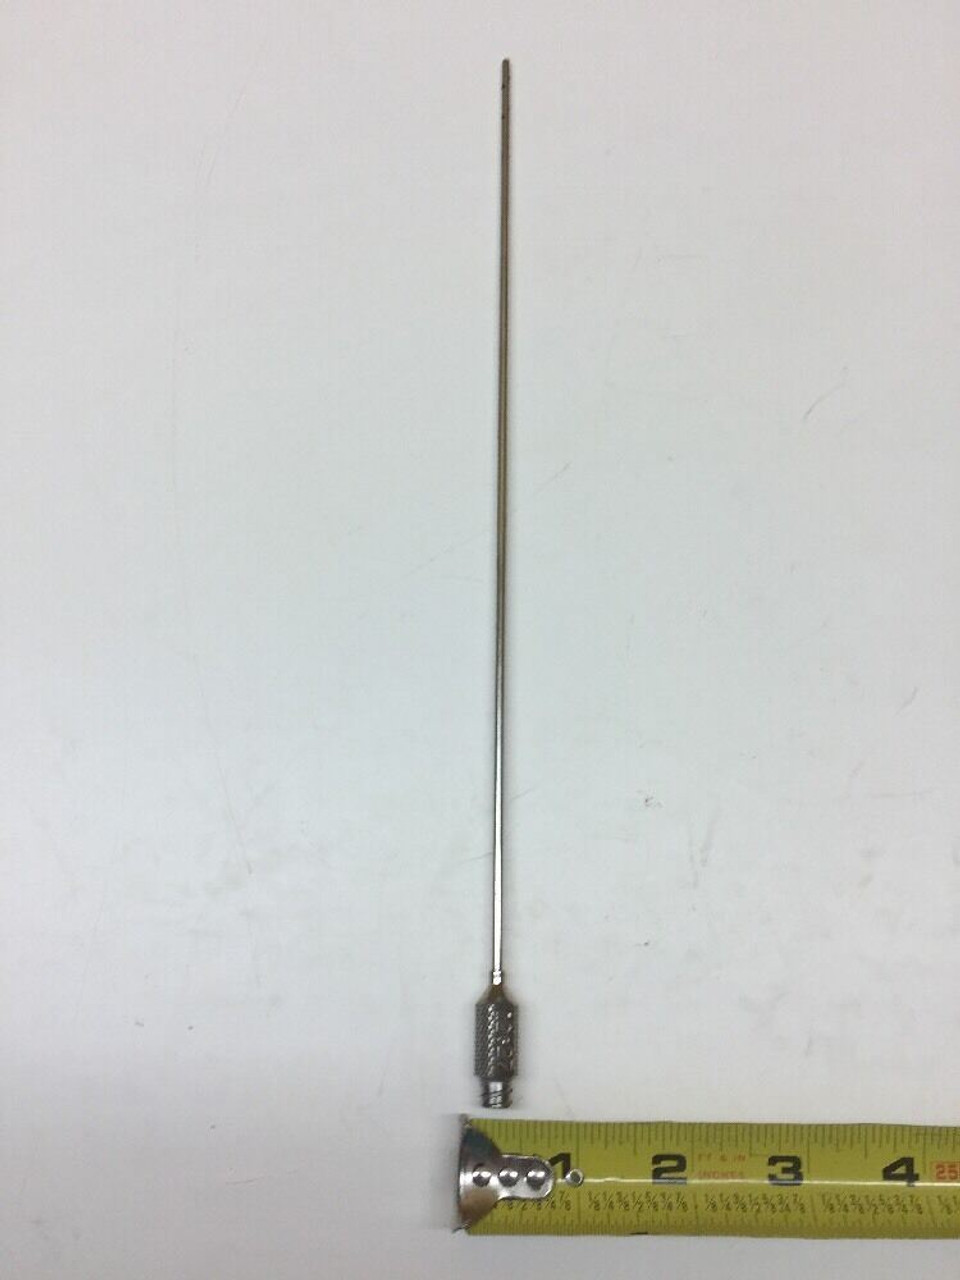 Detachable Antenna End Tip Topper 12G27 Silver Diameter 0.5" Length 11.5"